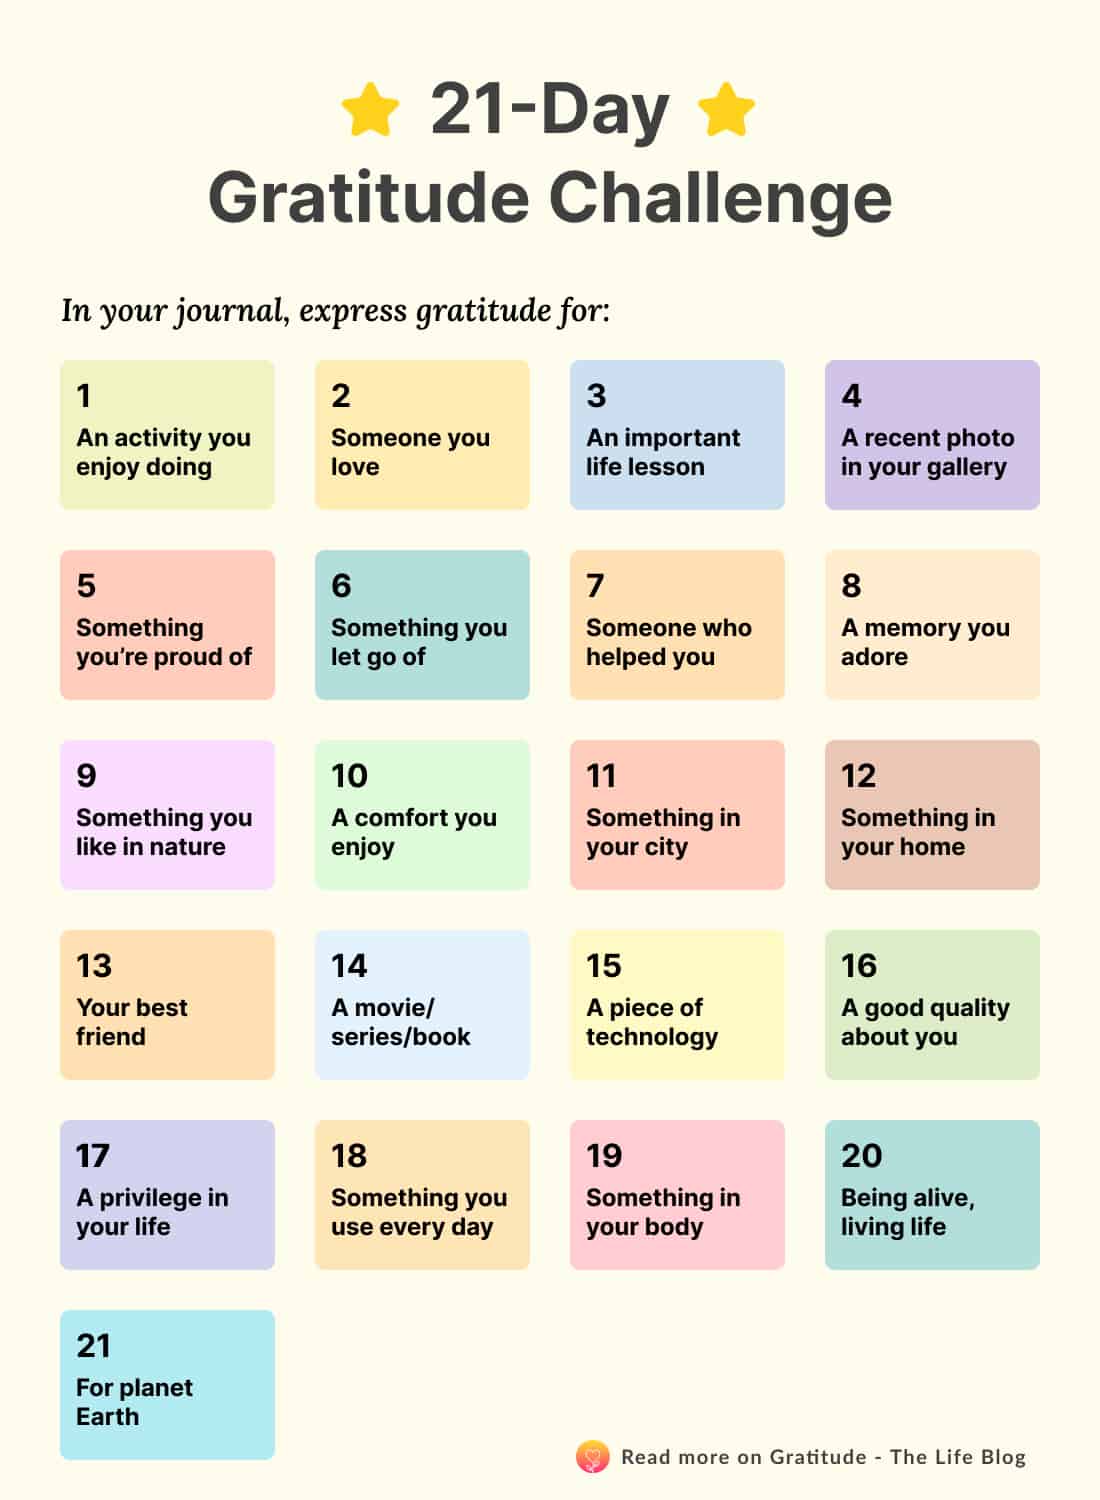 Image with 21-day gratitude challenge list